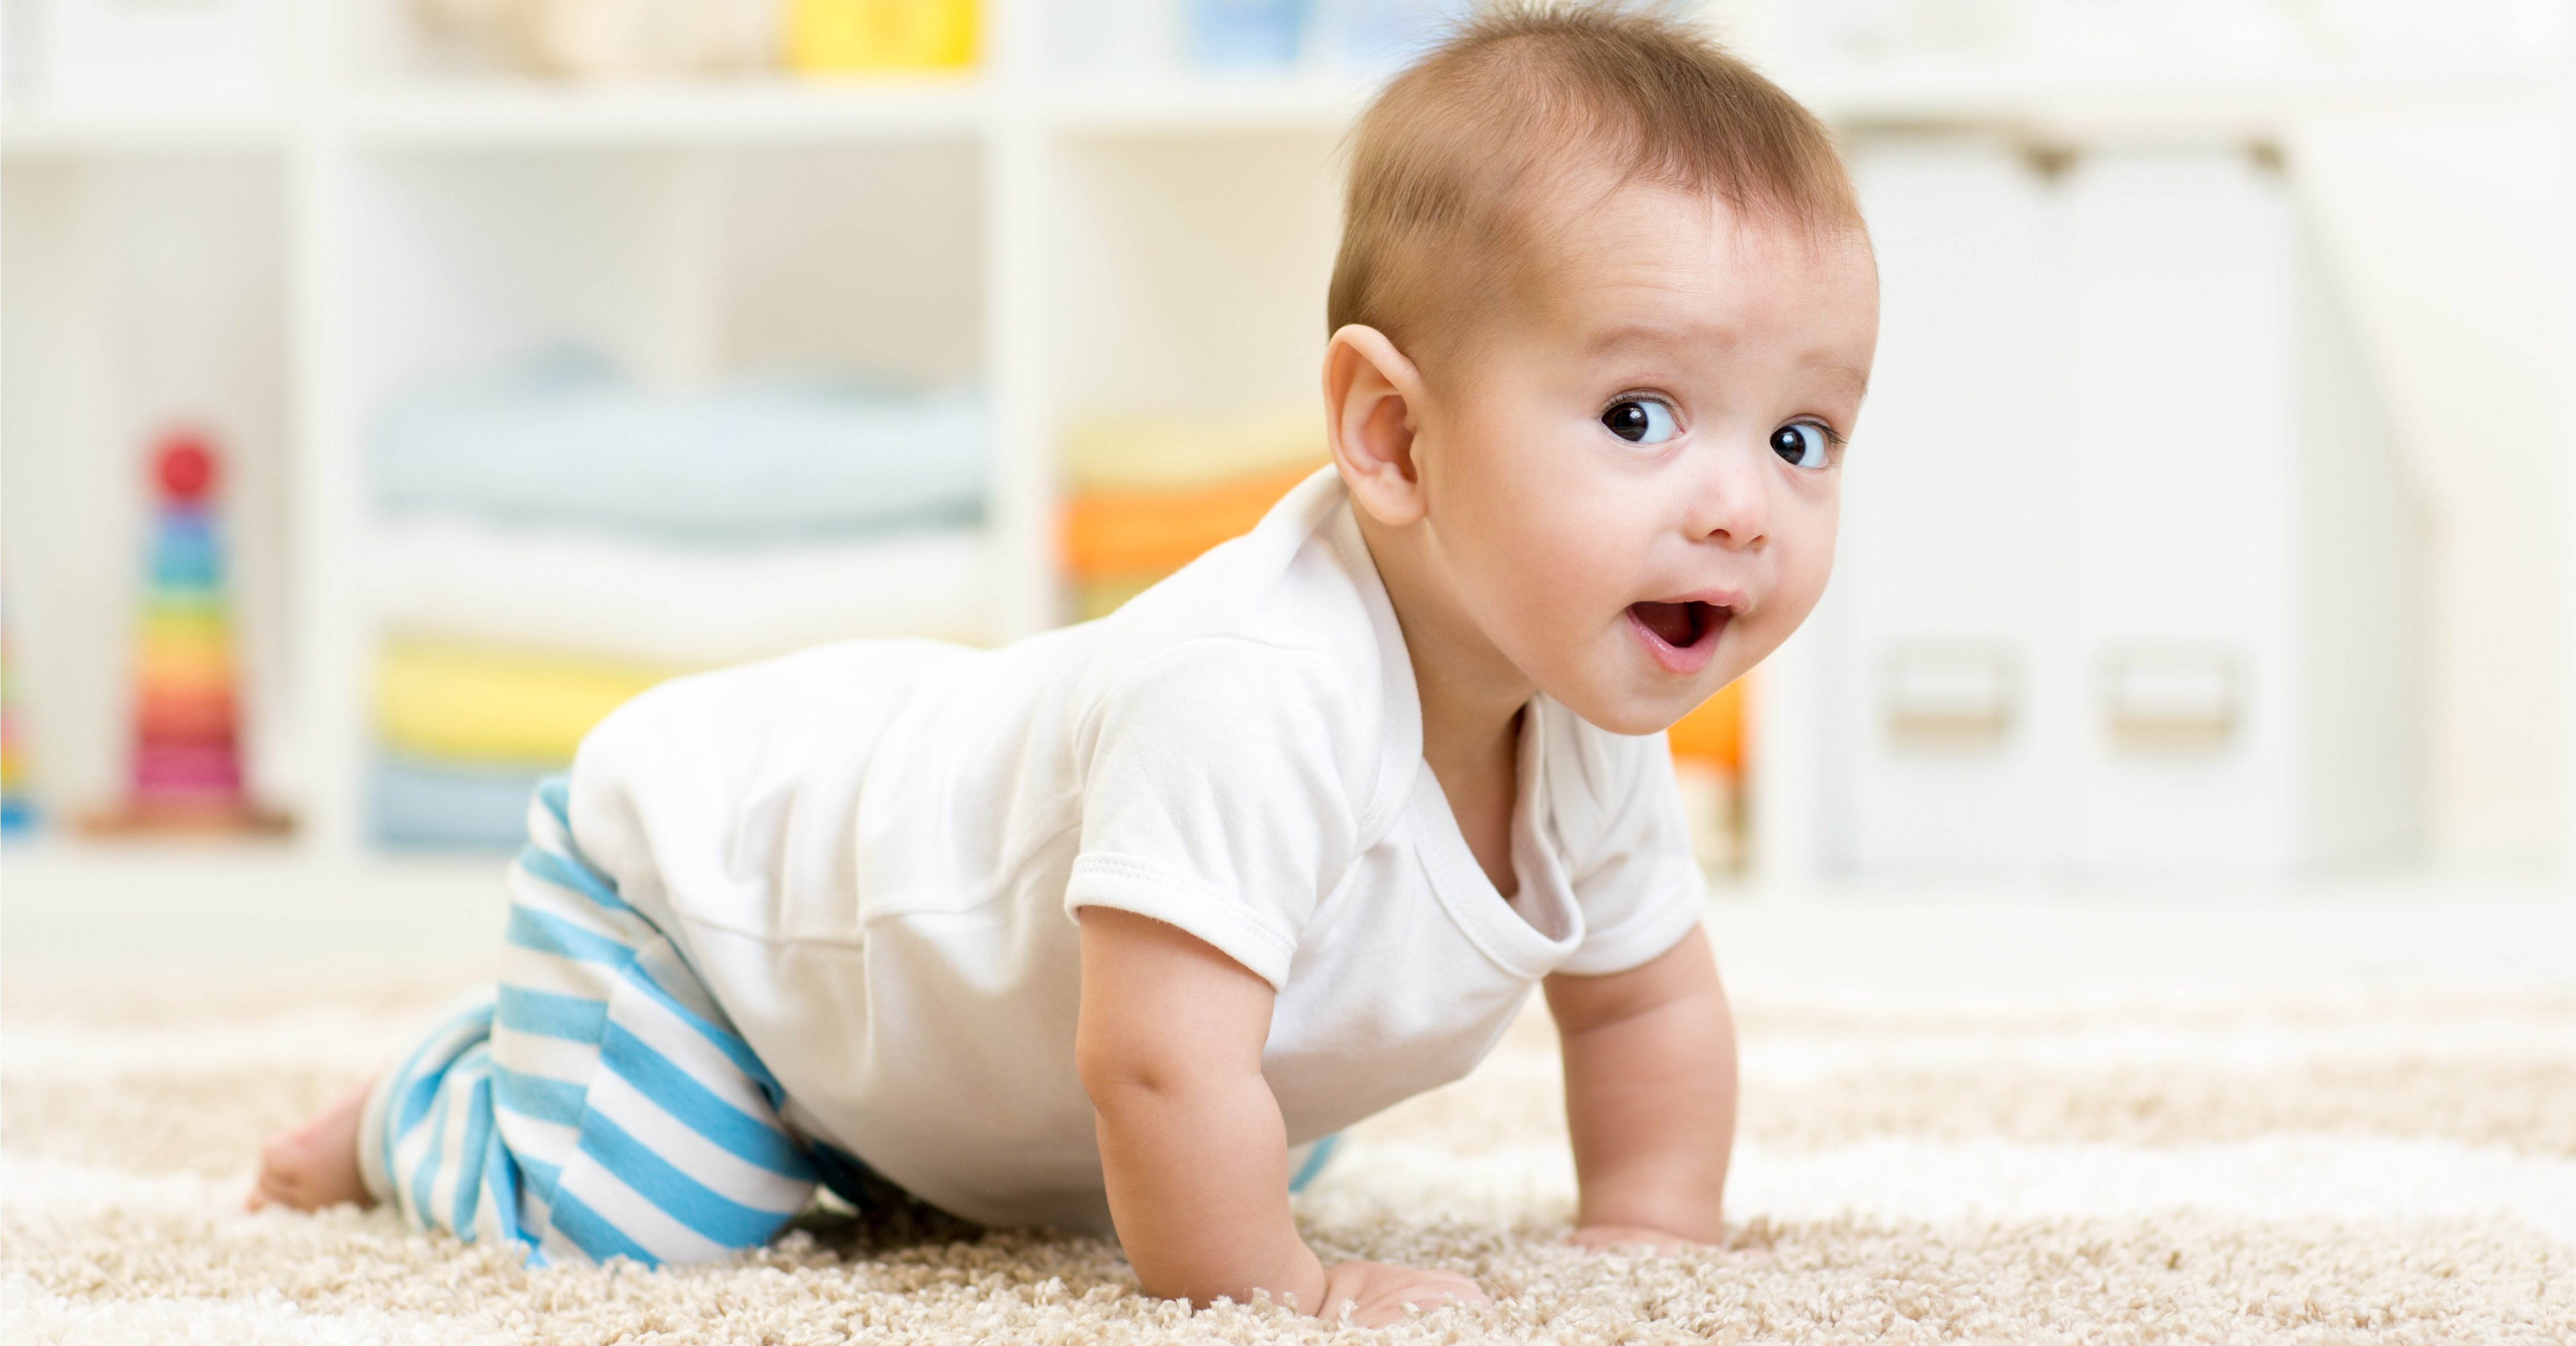 When Do Babies Start Crawling